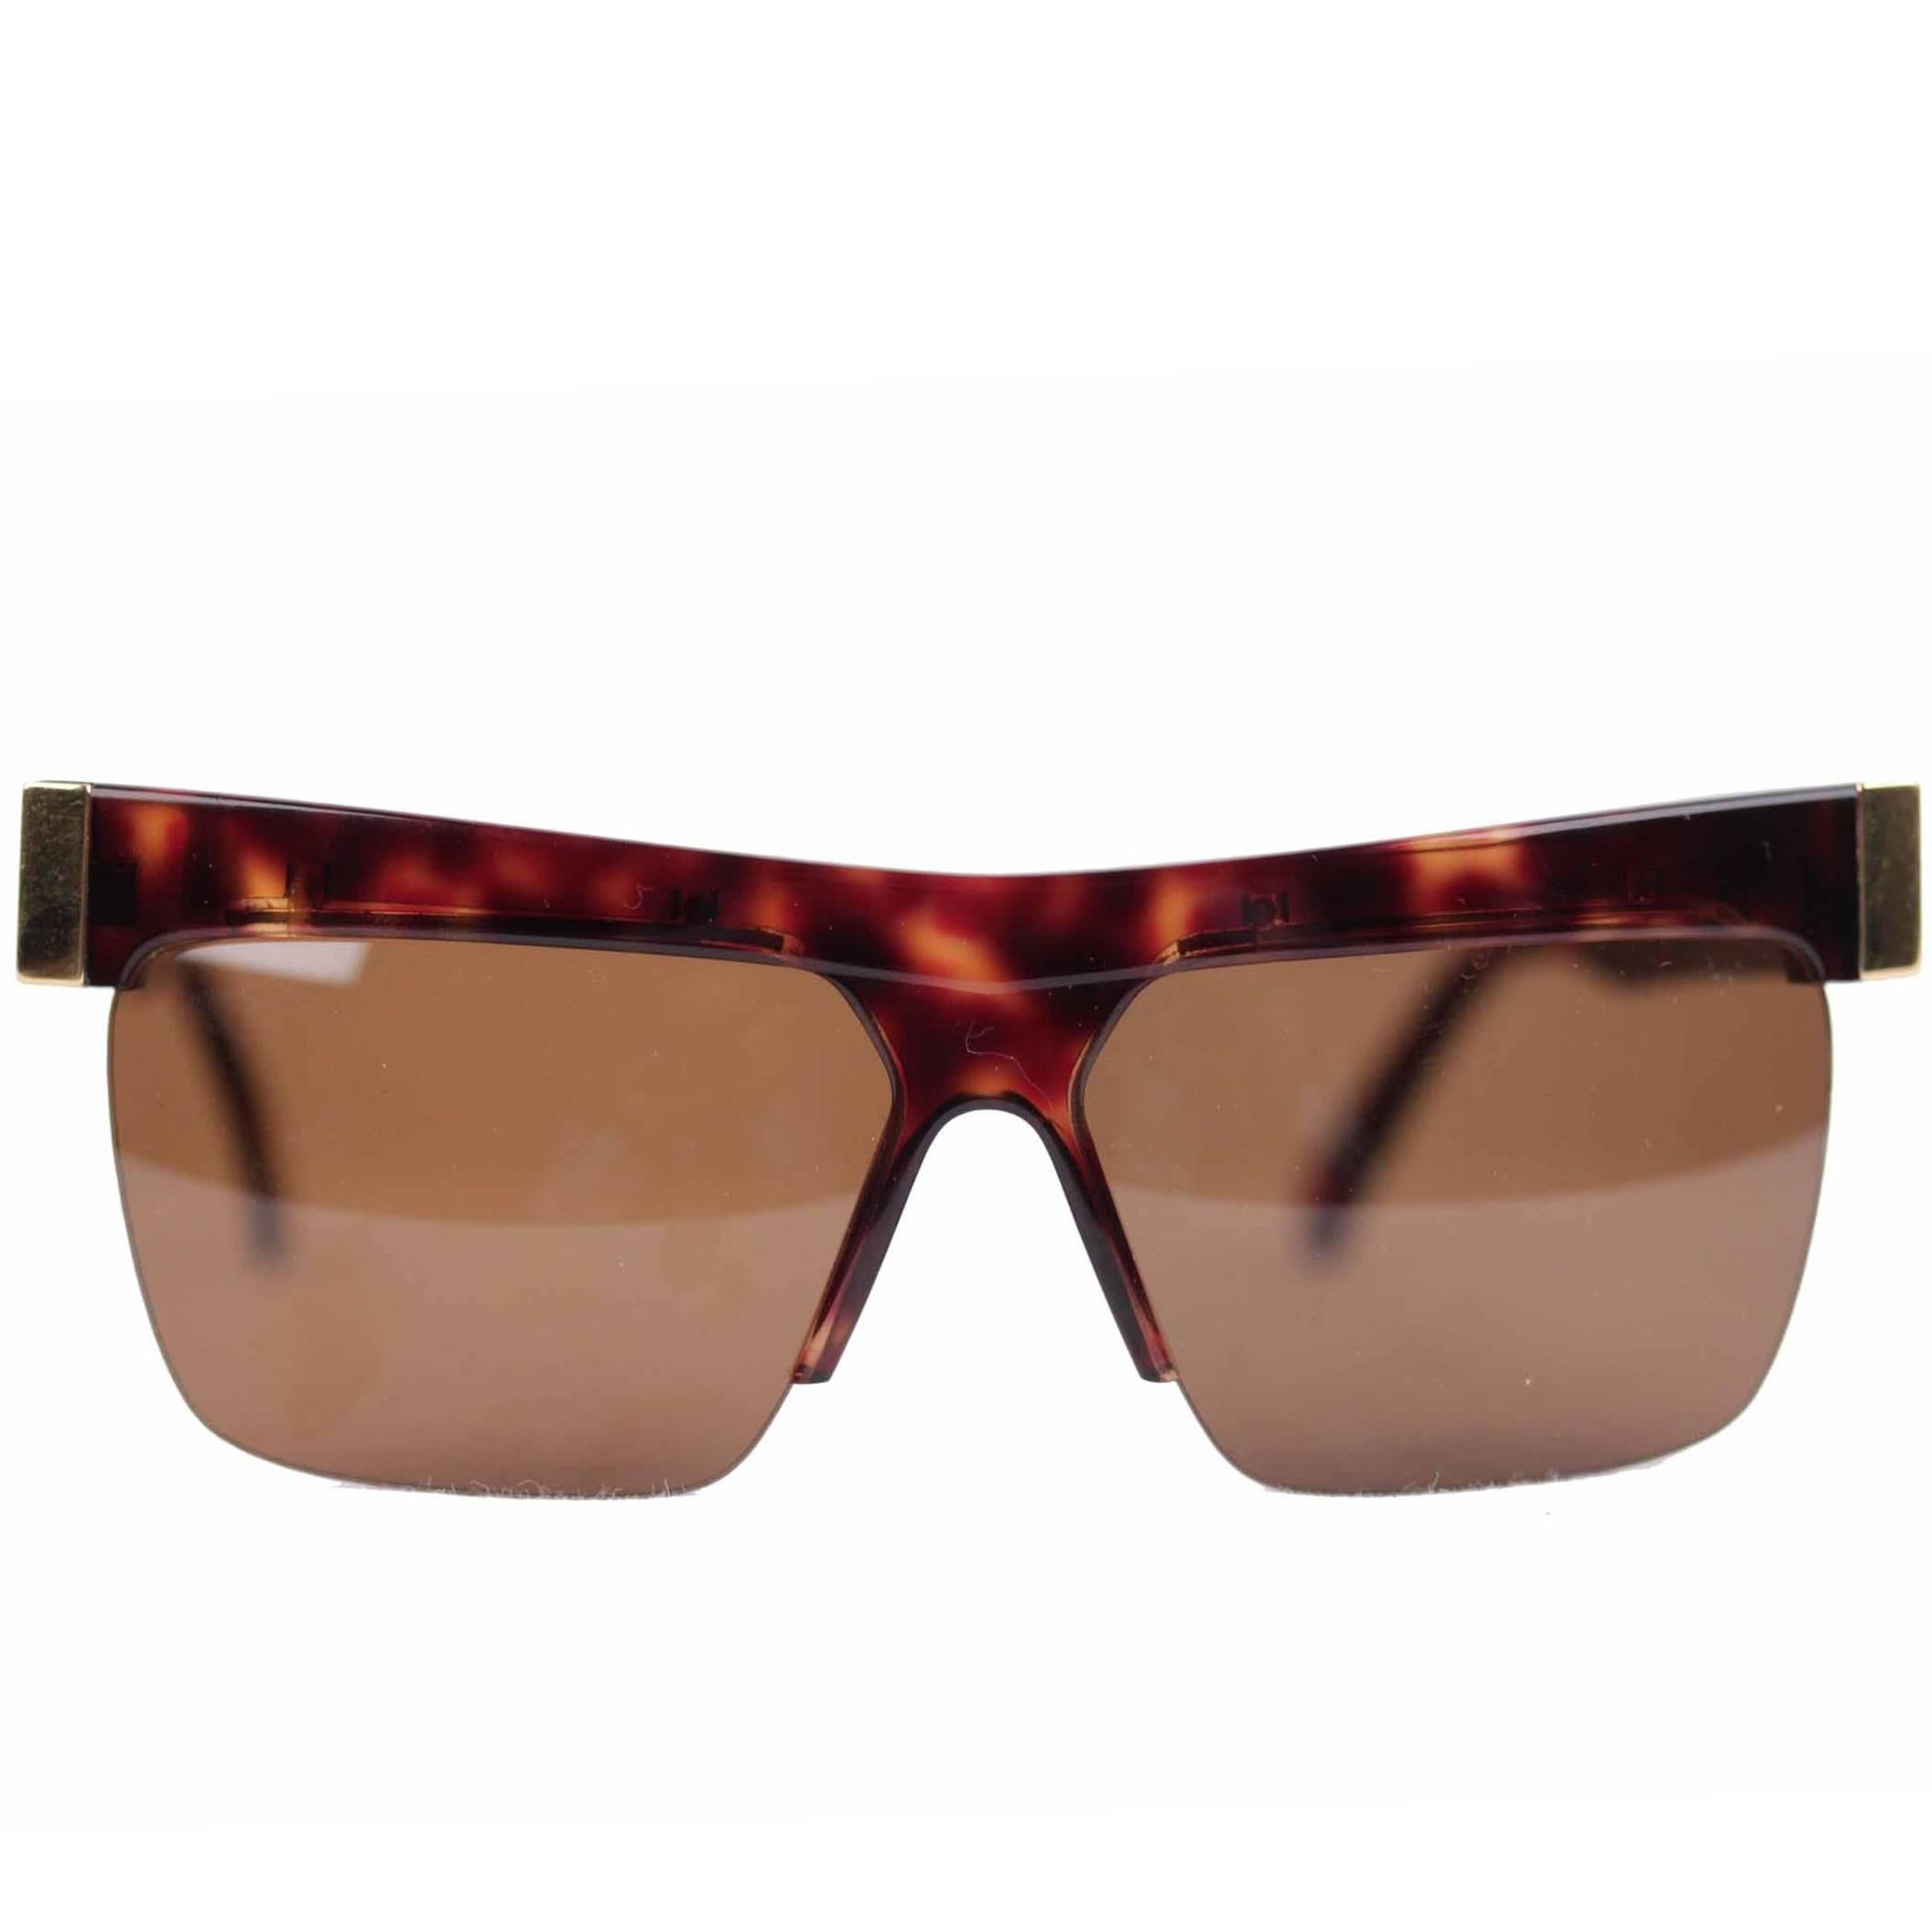  Gianni Versace Vintage Gold / Brown Sunglasses Mod. 399 Col 740 60/15 Eyewear 